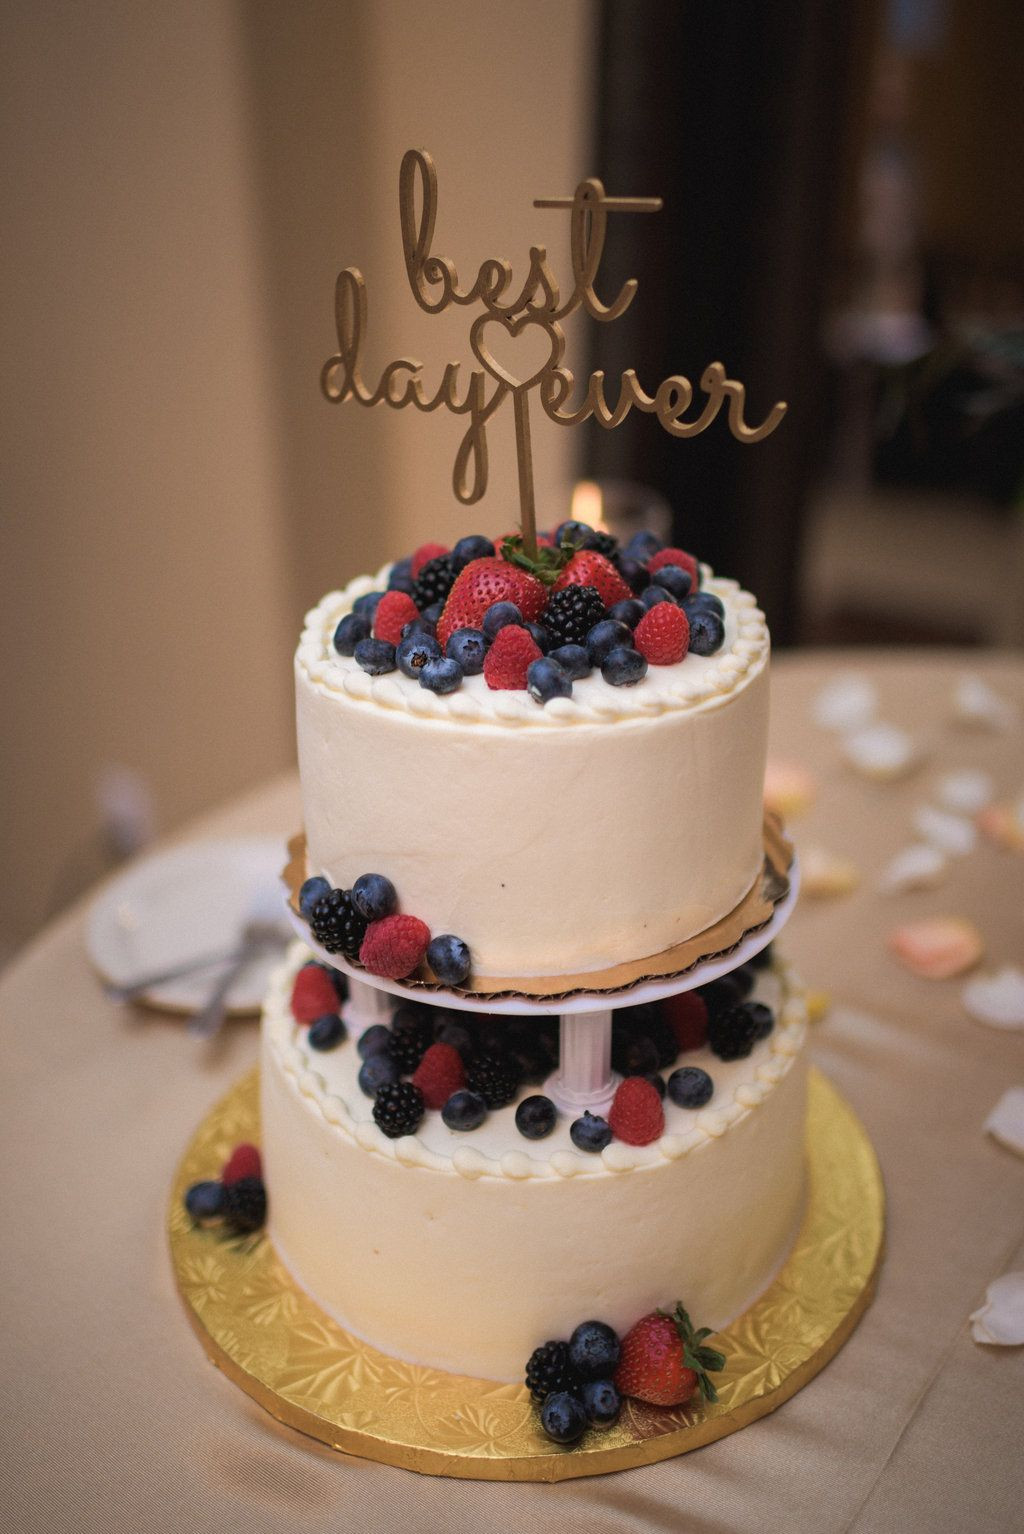 Whole Foods Wedding Cake
 Whole foods Berry Chantilly wedding cake